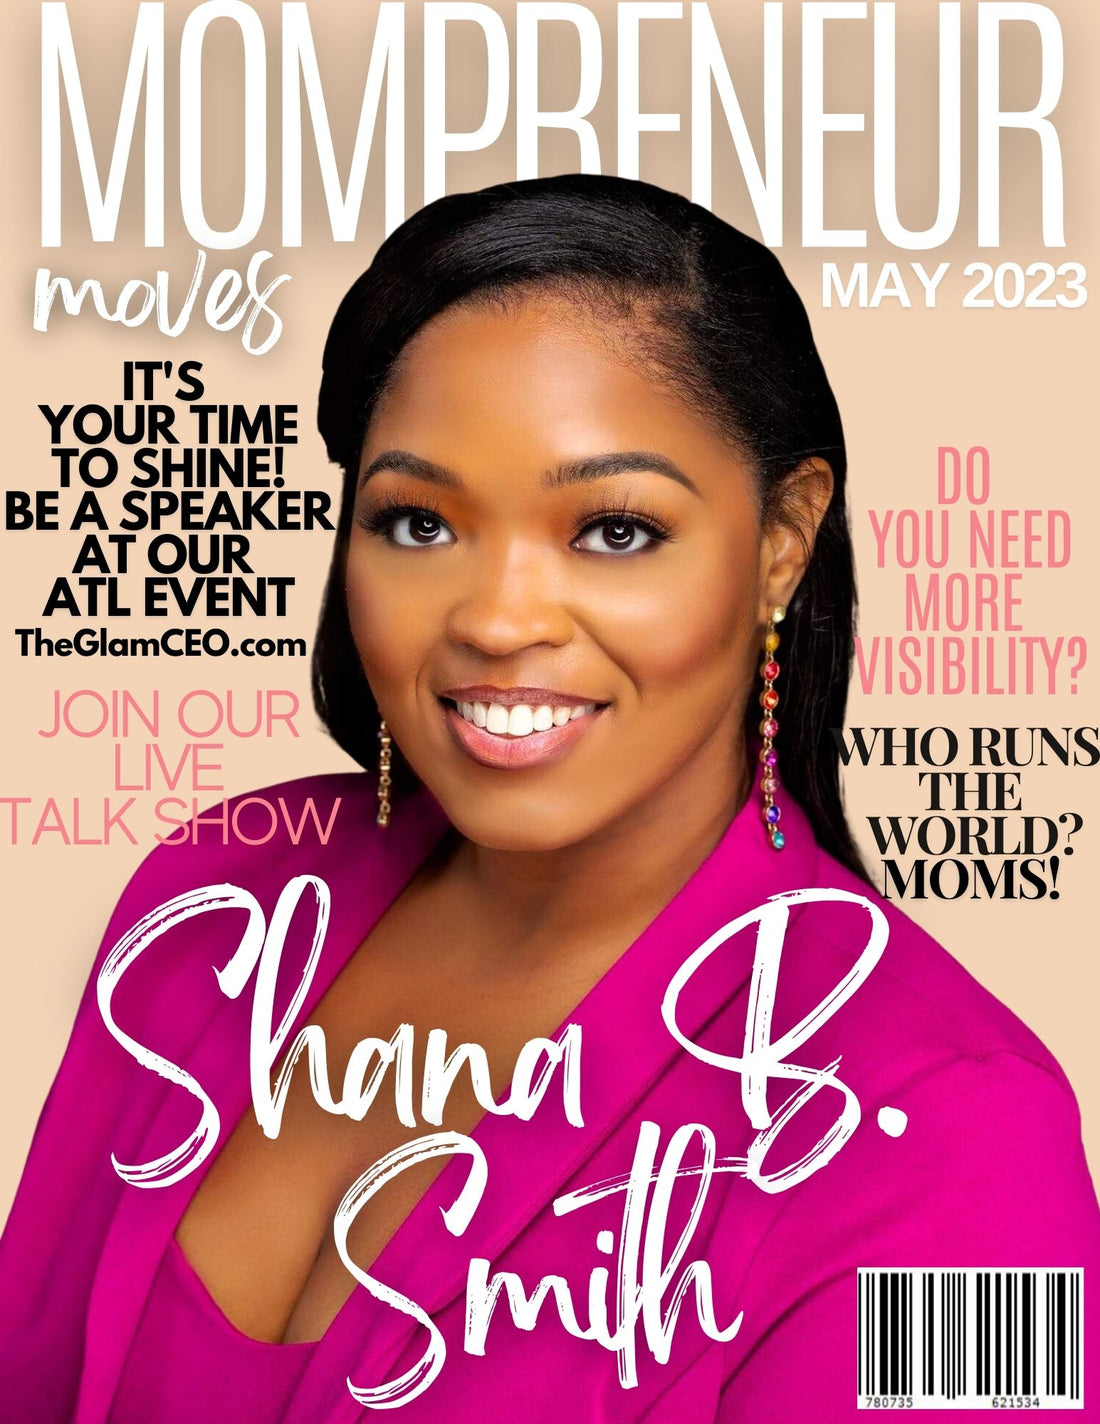 Meet Mompreneur: Shana B. Smith!